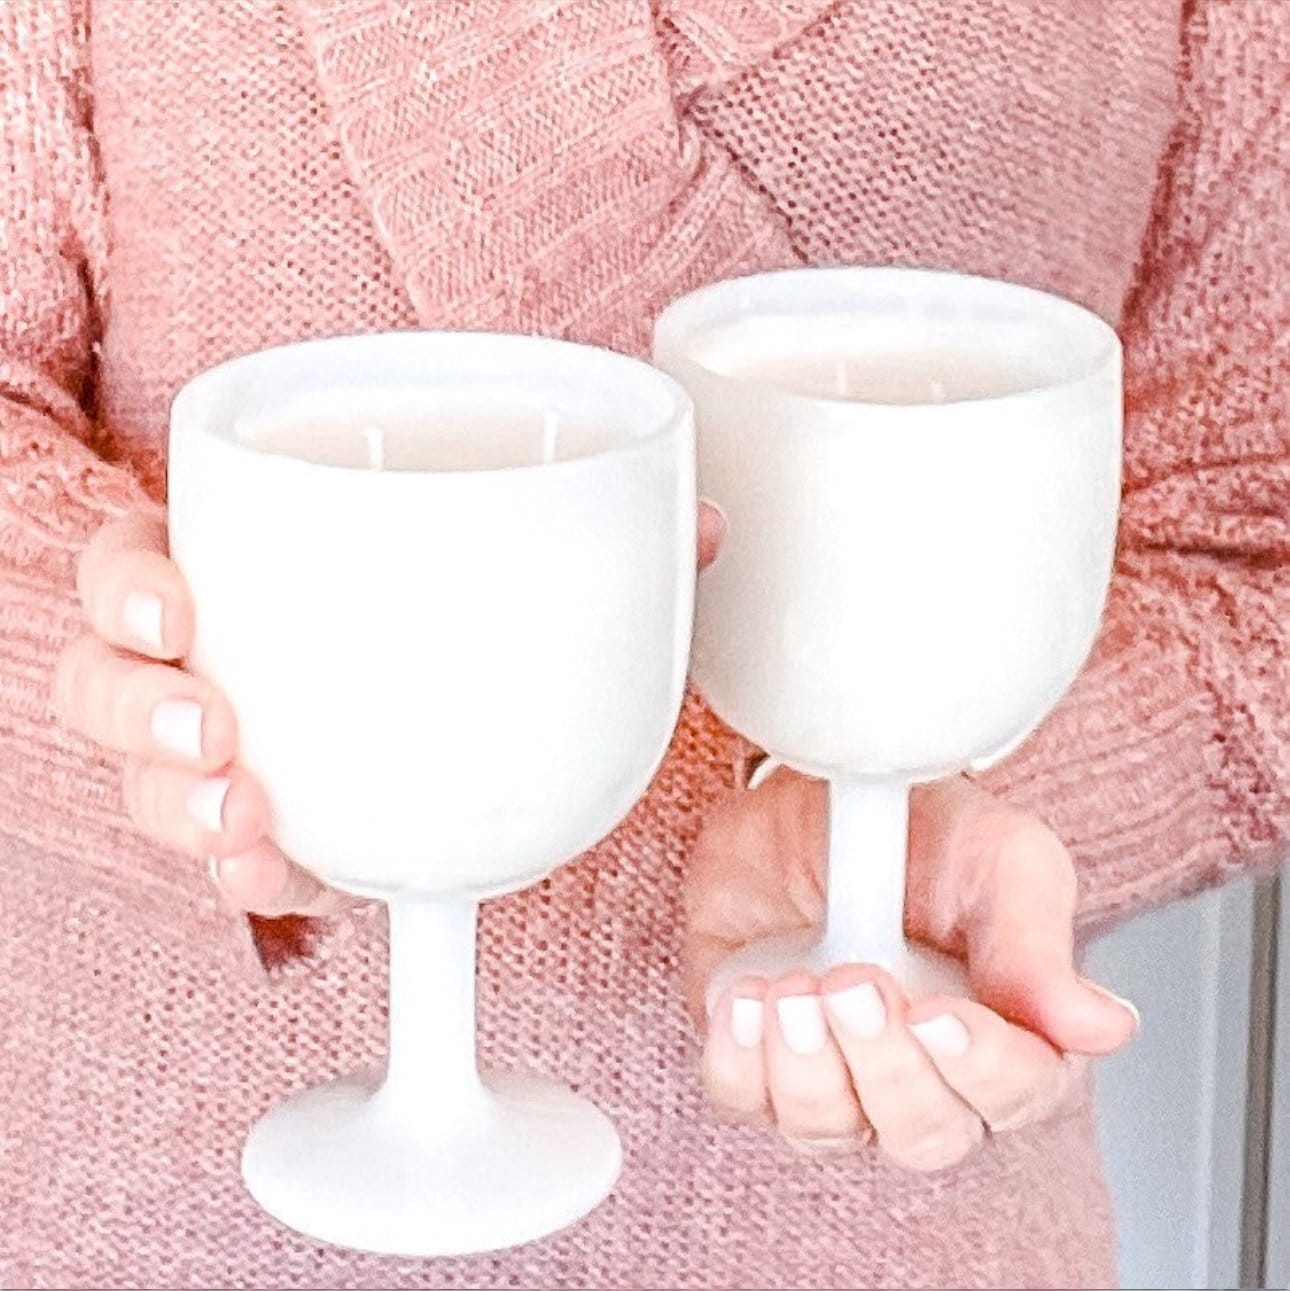 Unique Candle in Vintage Milk Glass Goblets